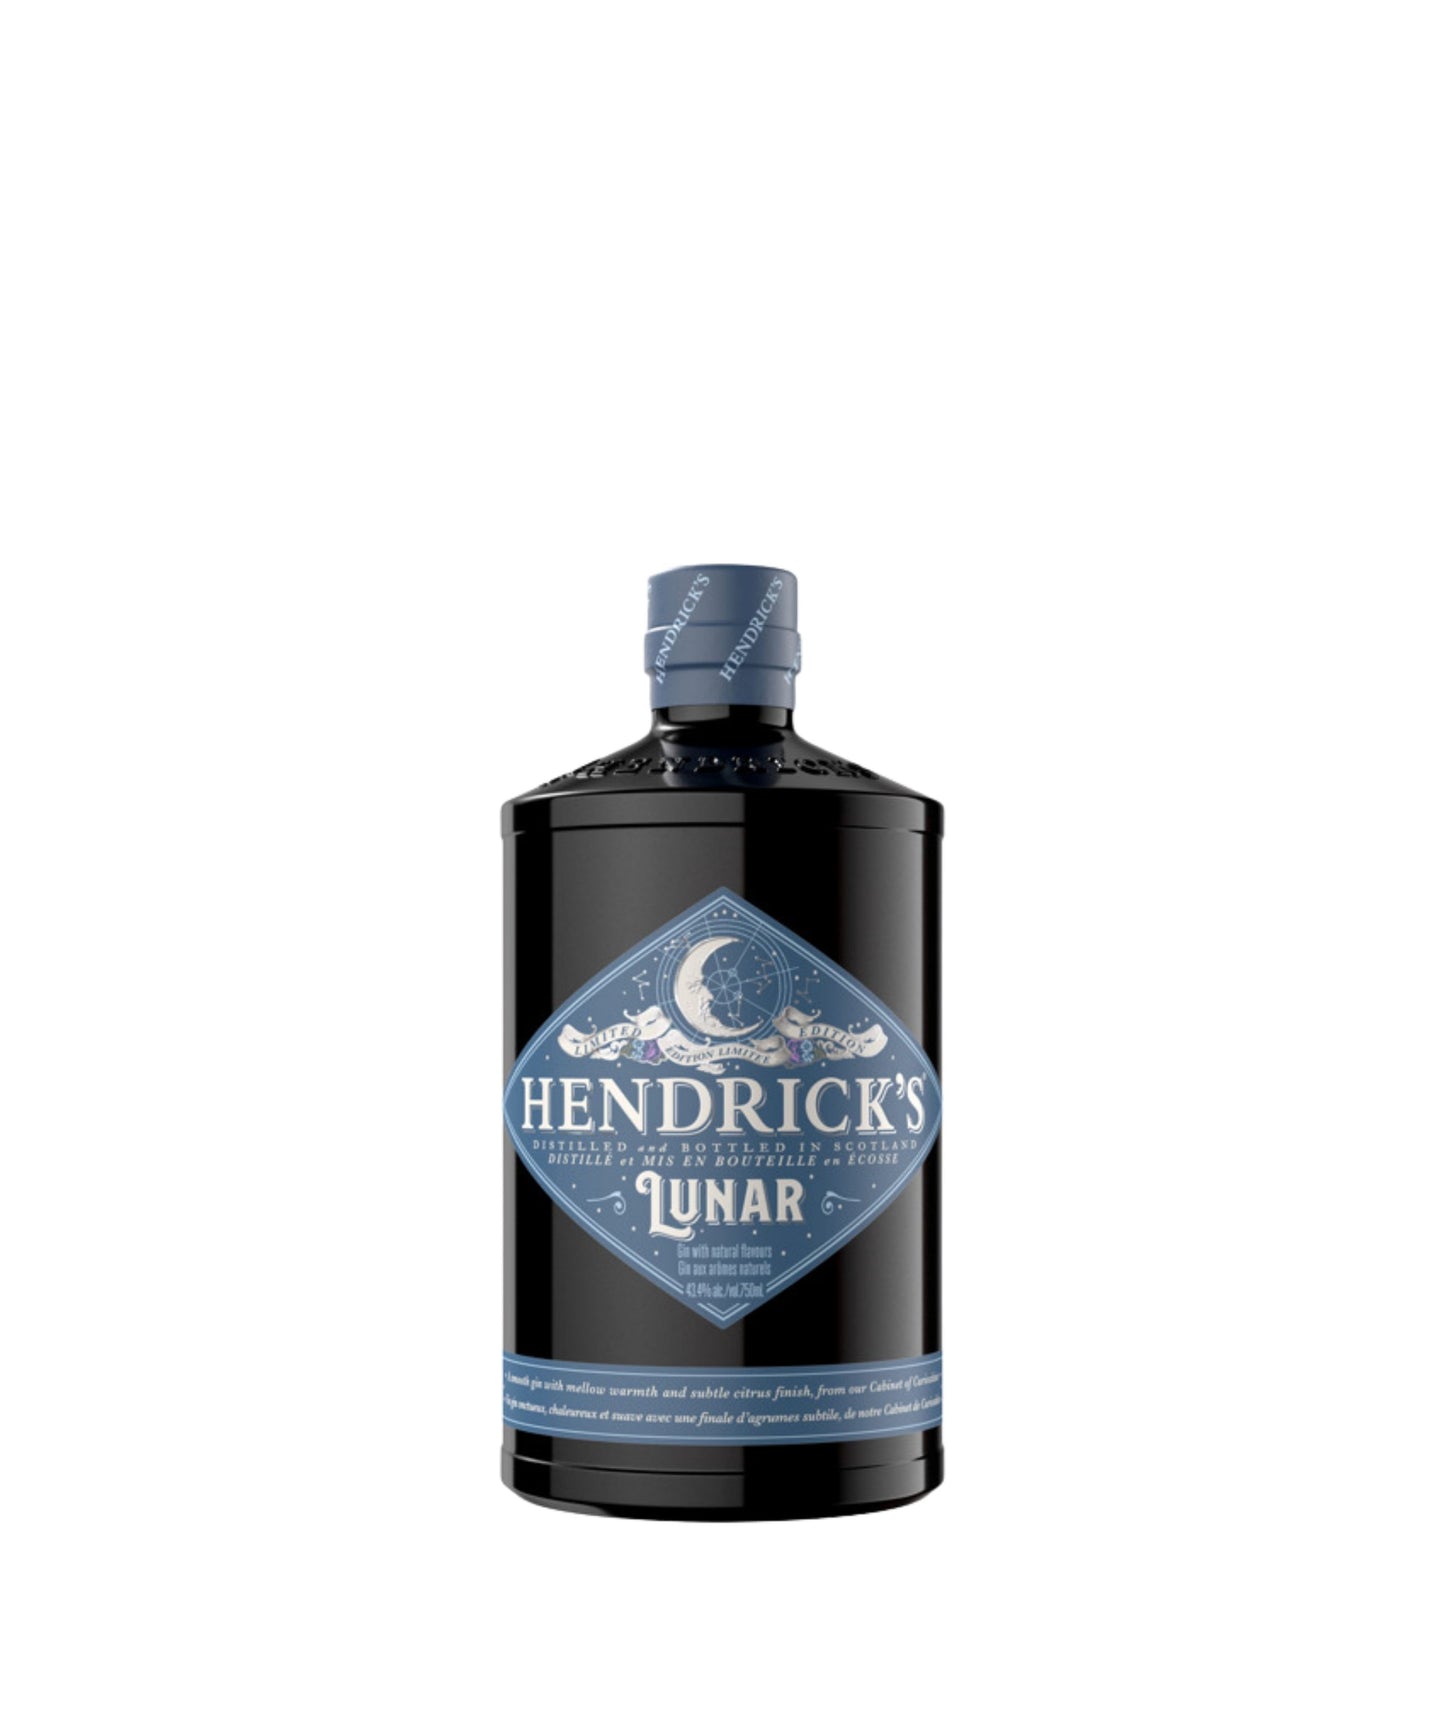 Hendrickʼs Lunar Gin